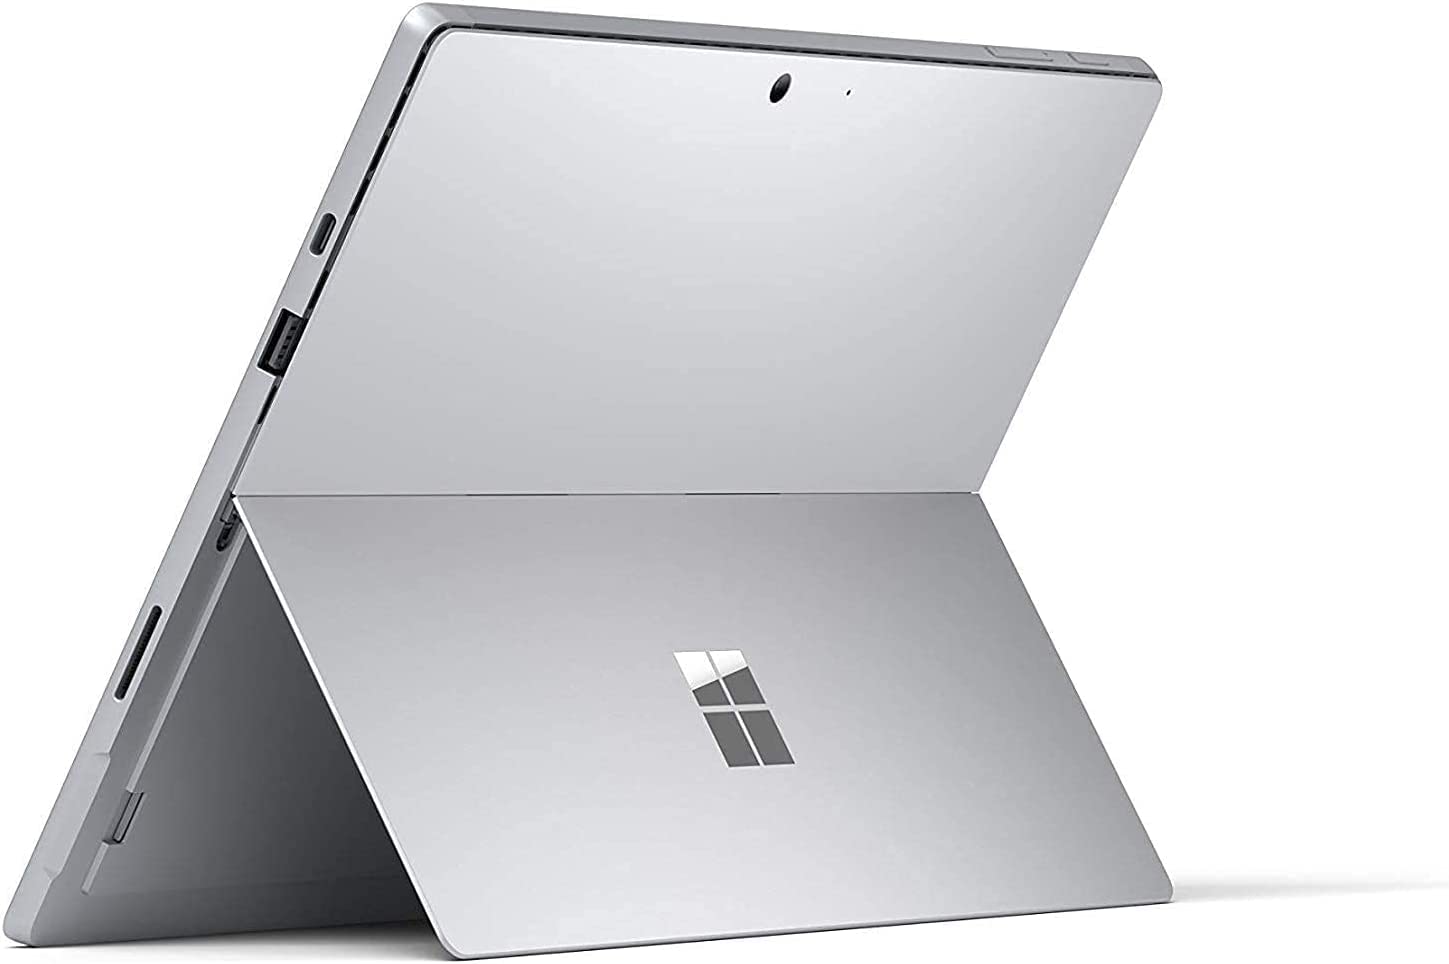 Microsoft Surface Pro 7 Tablet, 12.3in Touchscreen, Intel i5-1035G4, 8GB RAM 128GB SSD, Display 2736 x 1824 Resolution, Backlit Keyboard, CAM, Windows 10 Pro(Renewed)